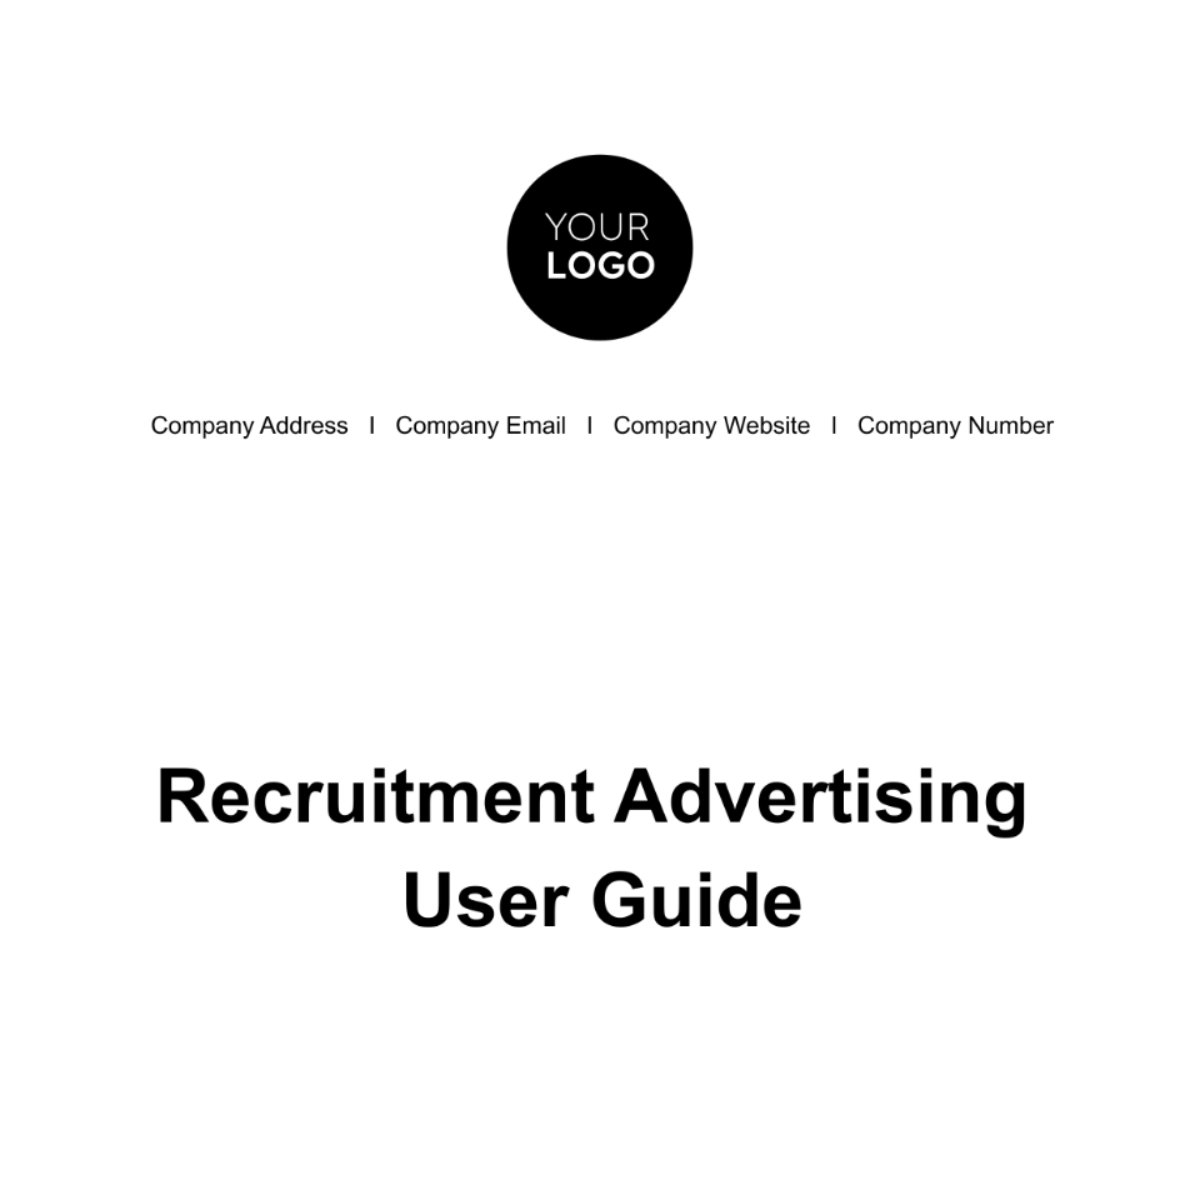 Recruitment Advertising User Guide HR Template